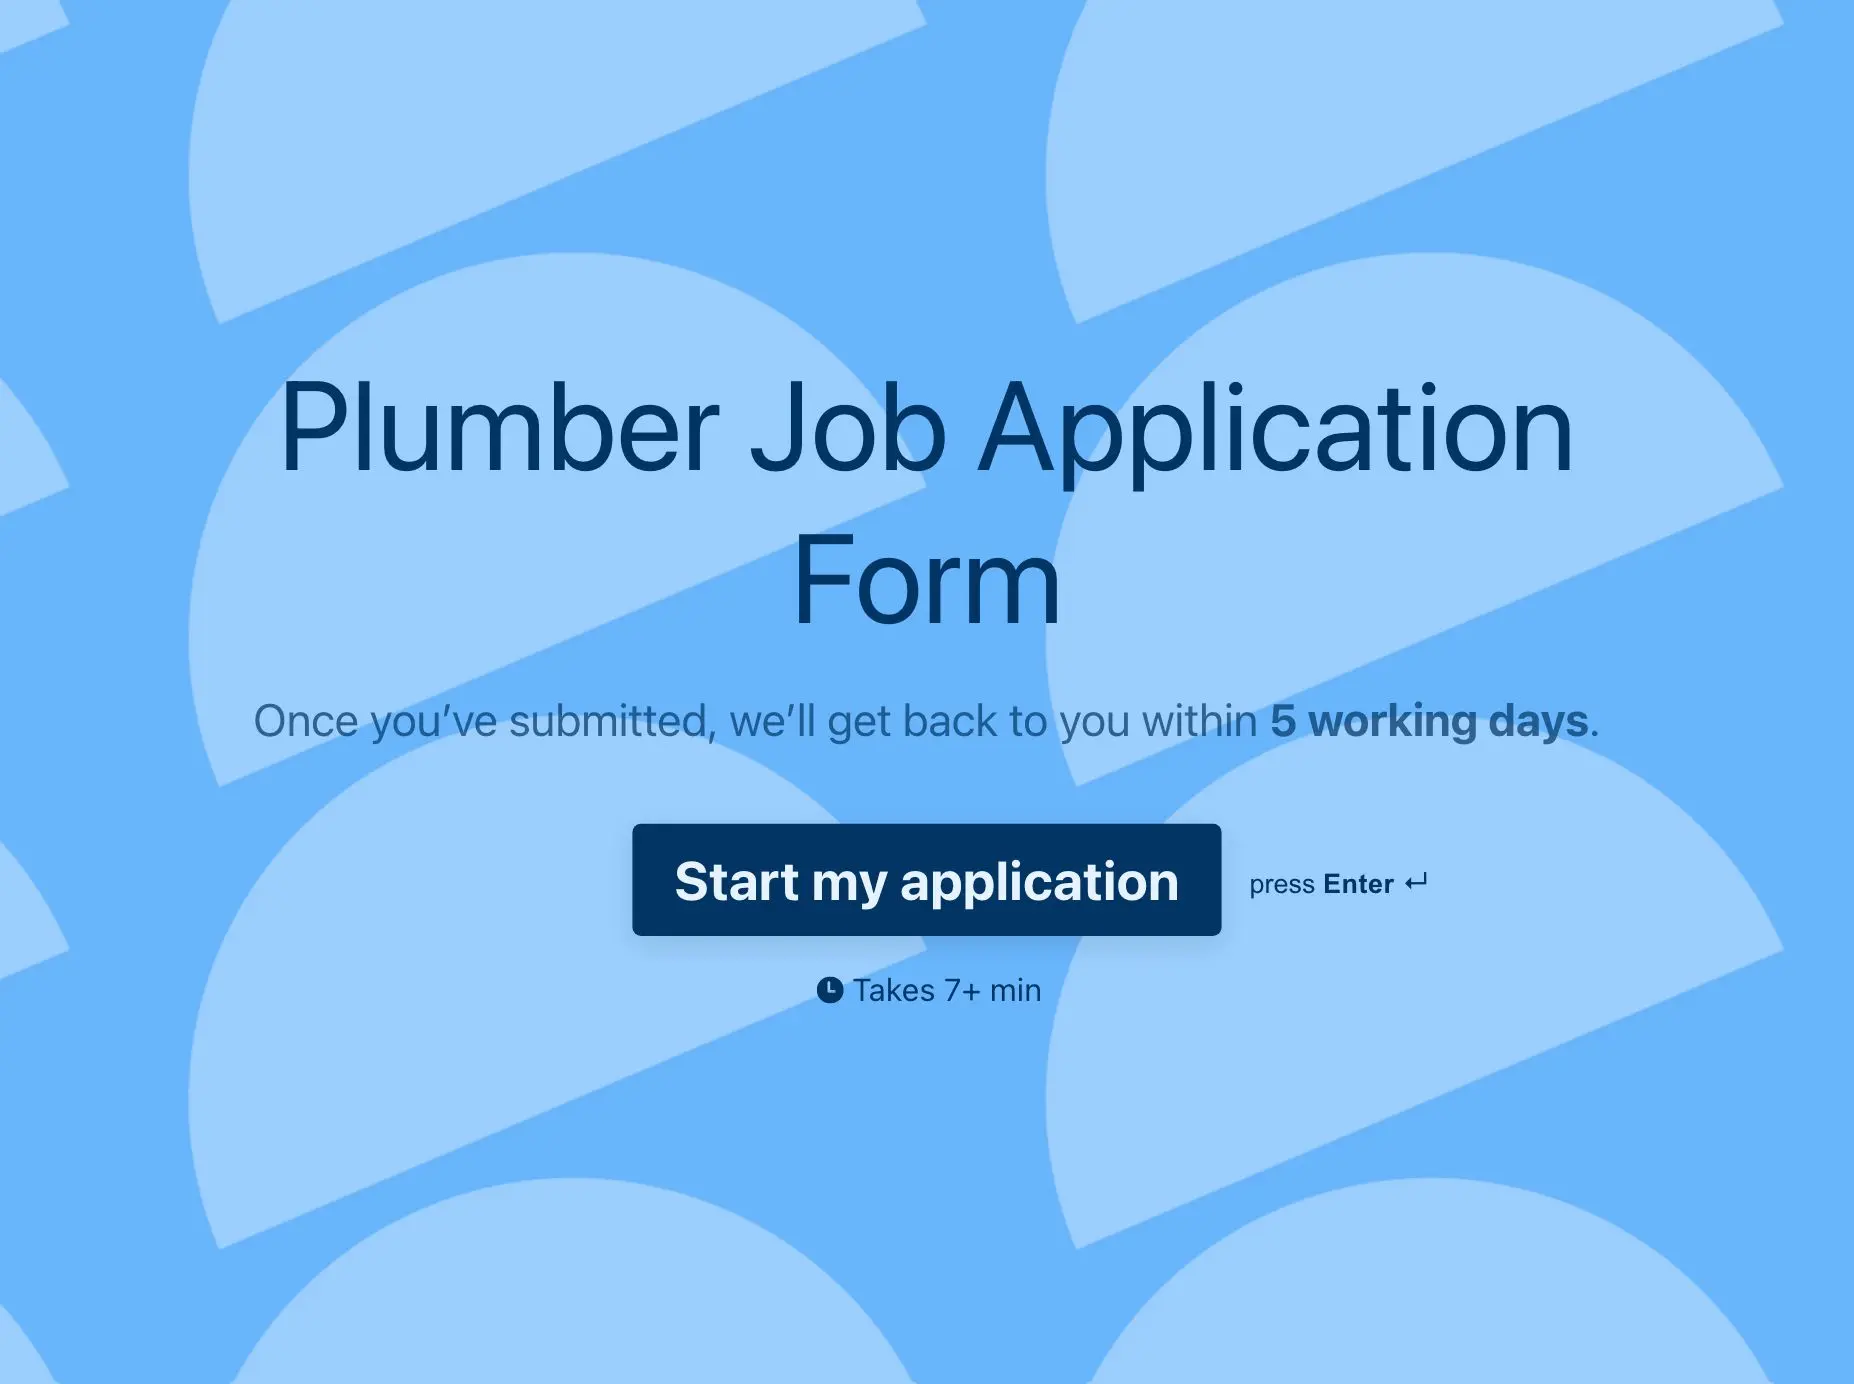 Plumber Job Application Form Template Hero